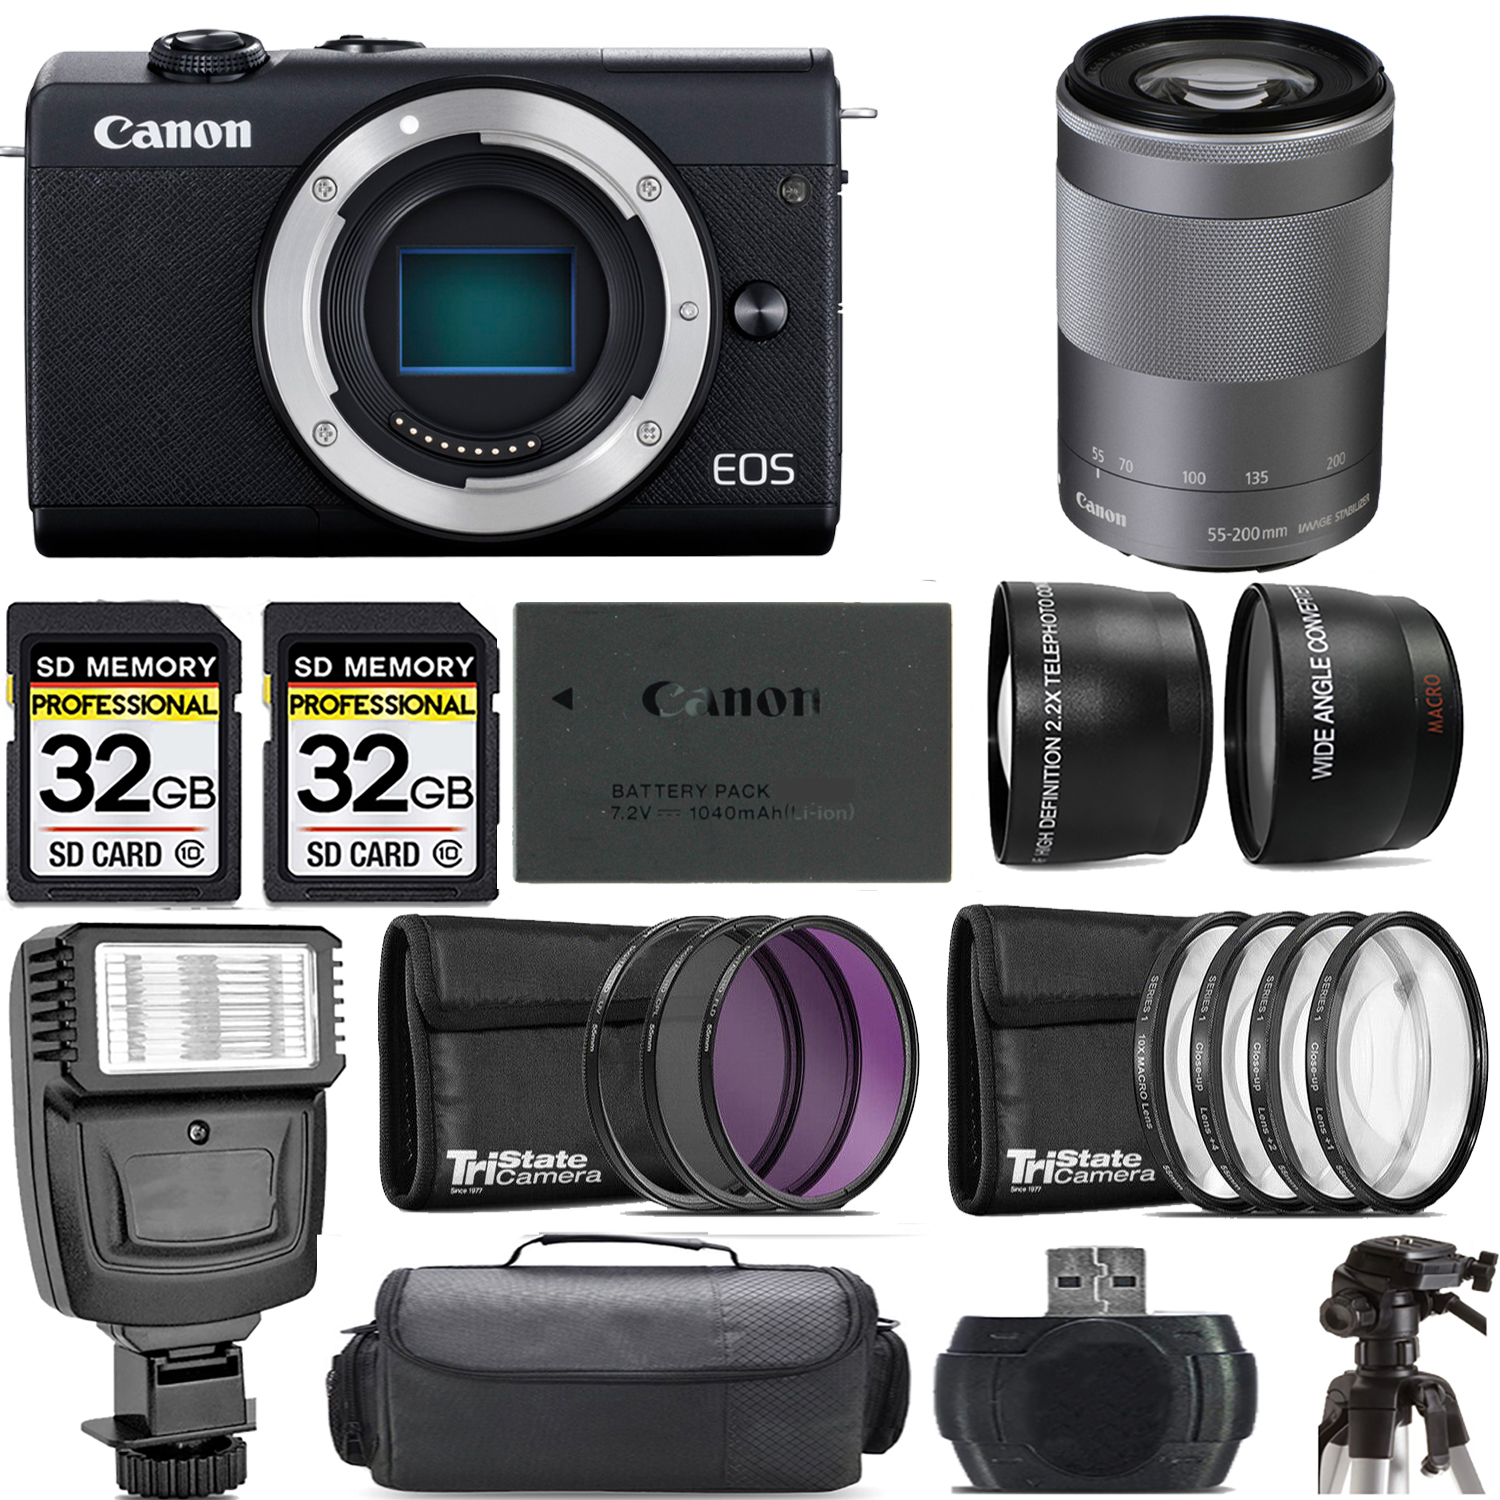 M200 Camera (Black) + 55-200mm f/4.5-6.3 IS STM Lens (Silver) + Flash - Kit *FREE SHIPPING*